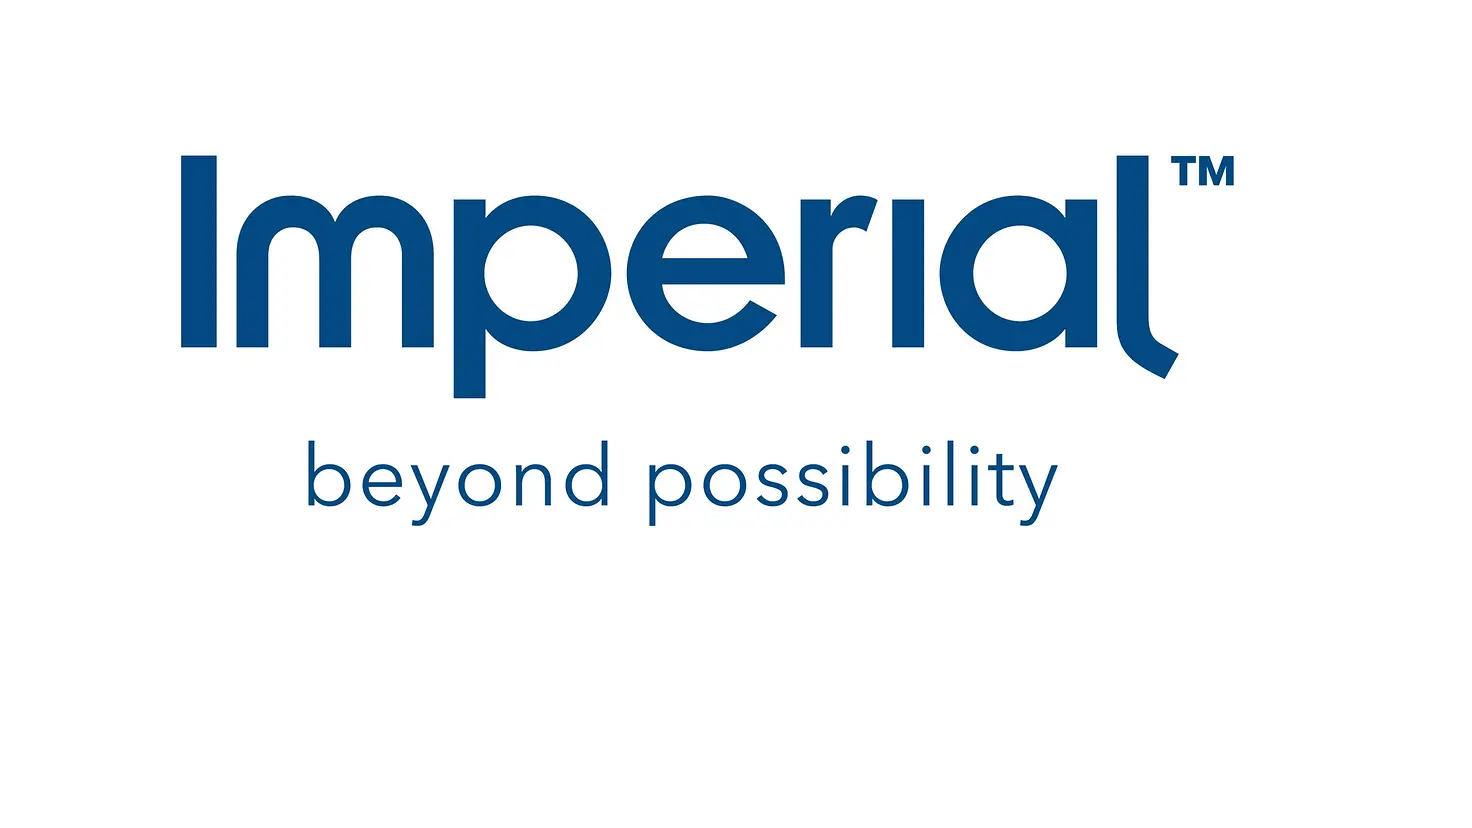 Logo Imperial